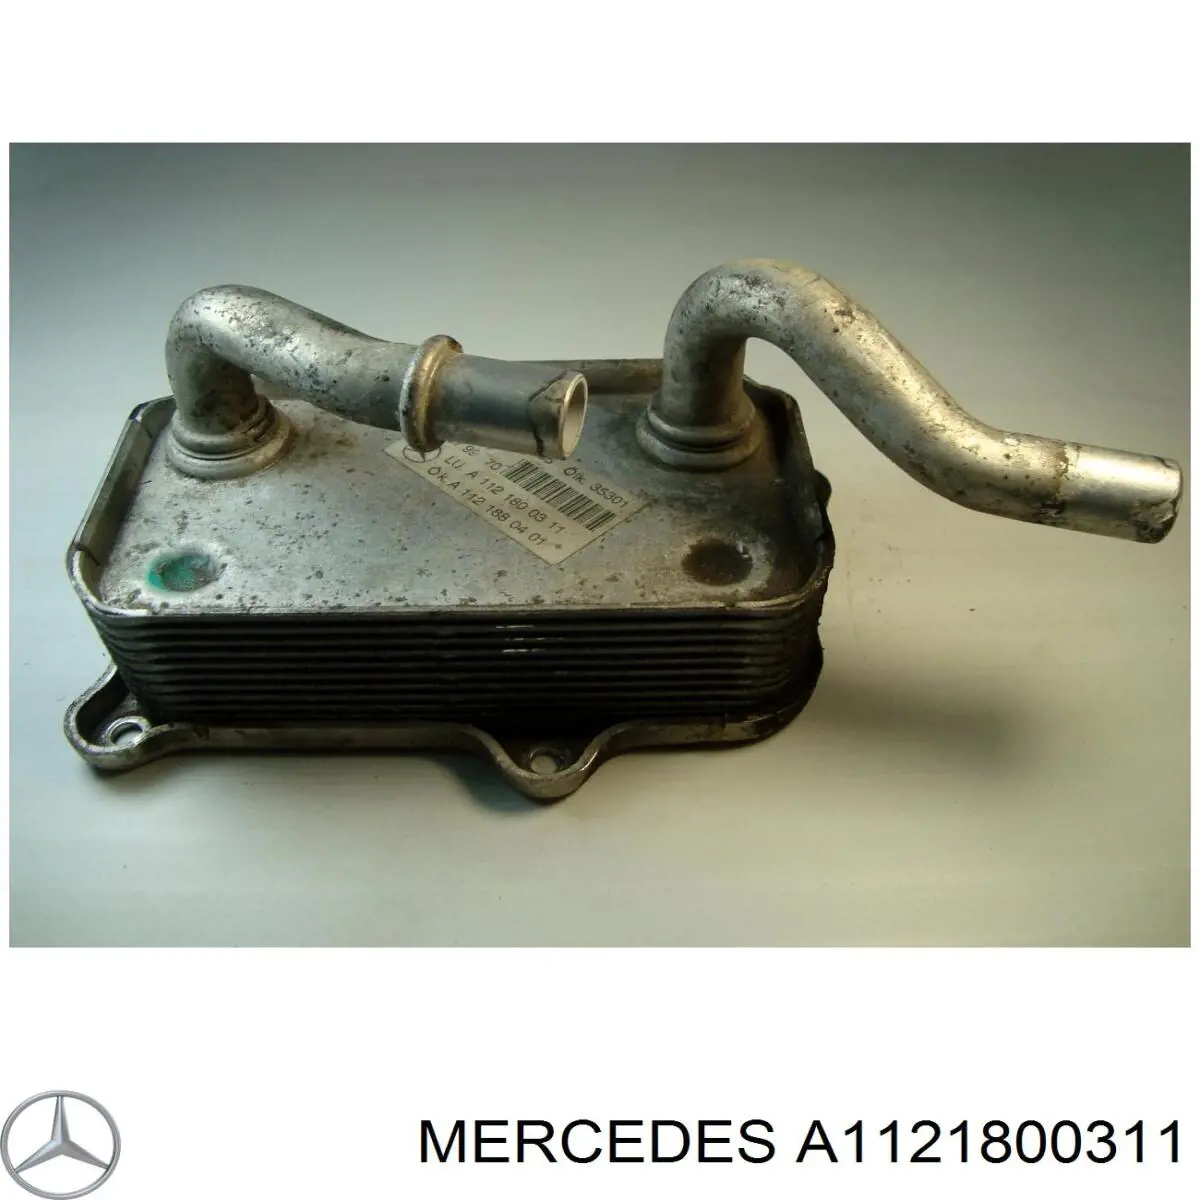 A1121800311 Mercedes радиатор масляный